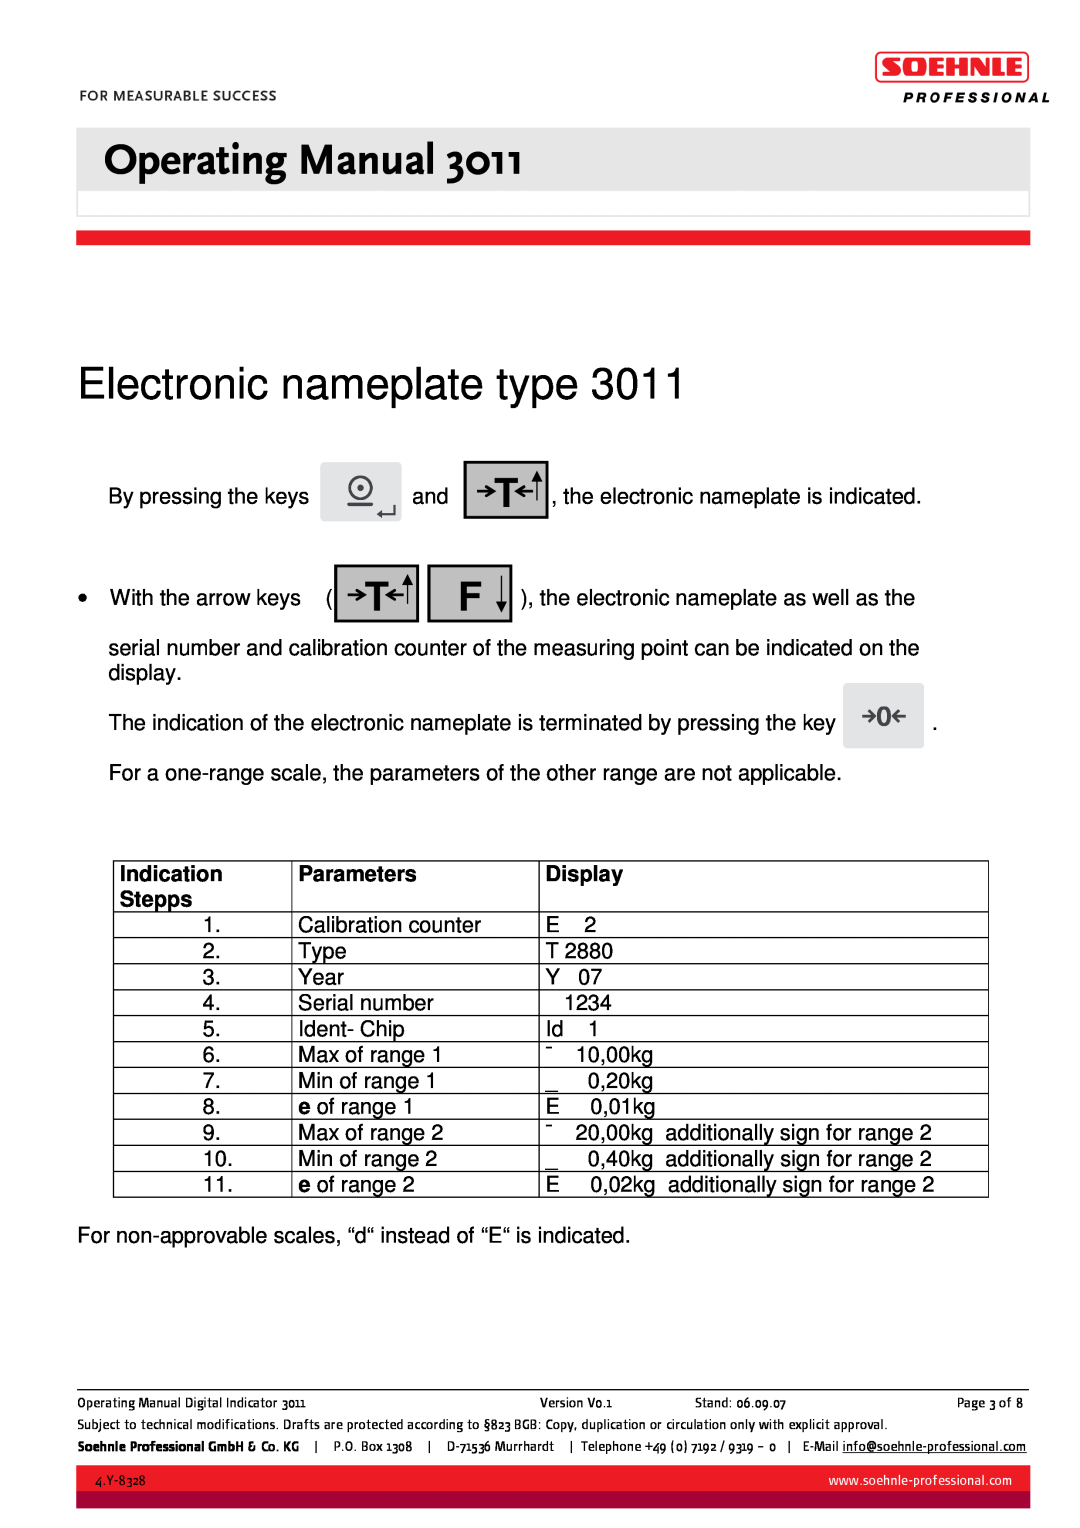 Soehnle 3011 manual Electronic nameplate type, Indication, Parameters, Display, Stepps, Operating Manual 